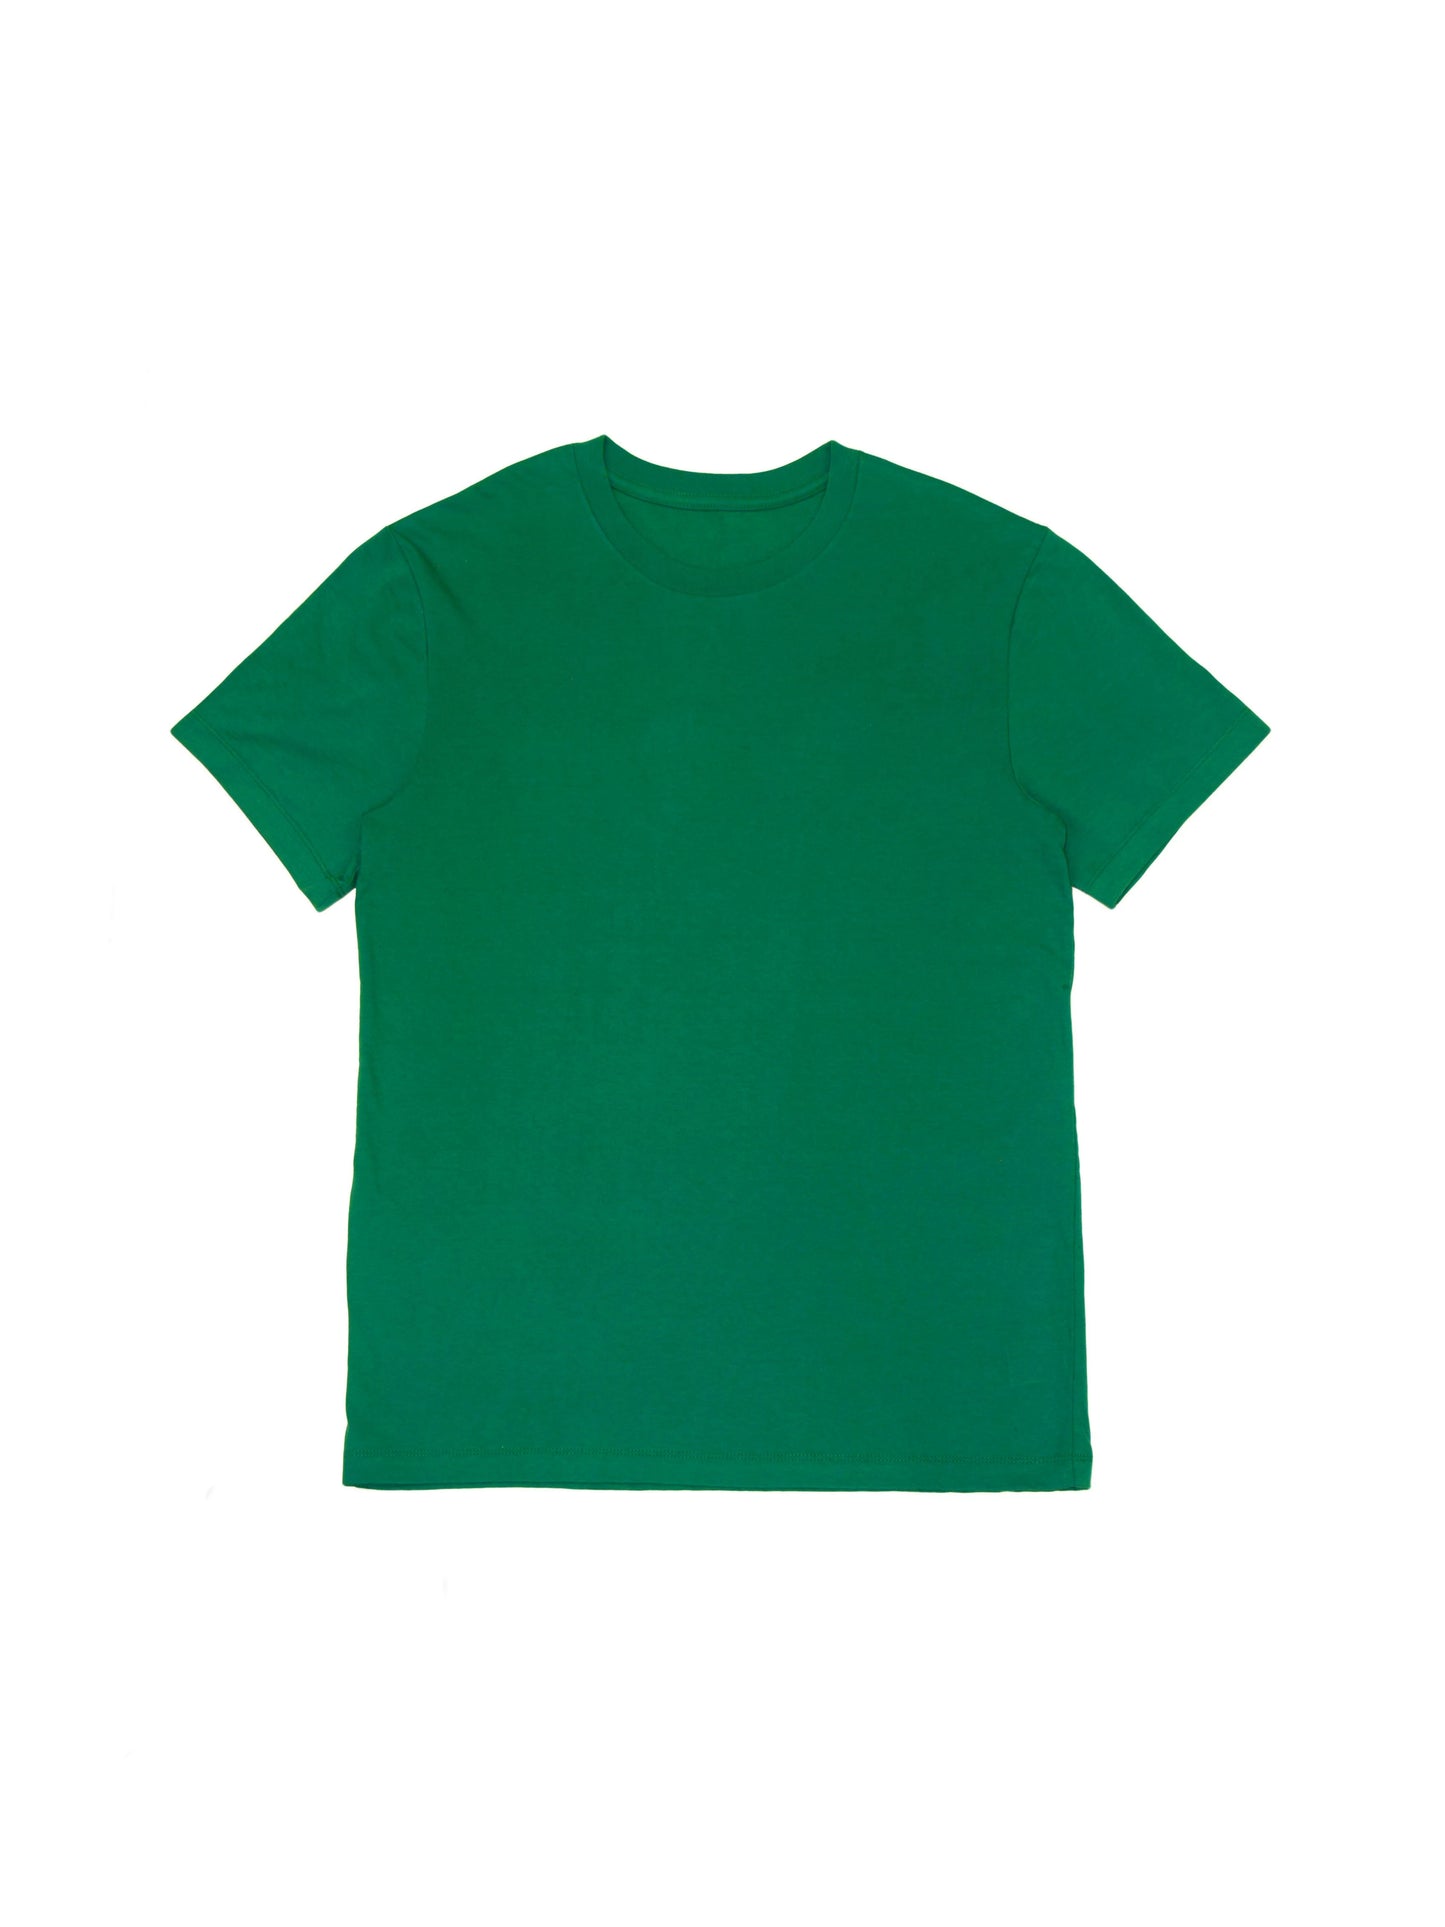 Emerald Green Tshirt - Boxy Fit - Premium Organic Cotton – Gabe Clothing